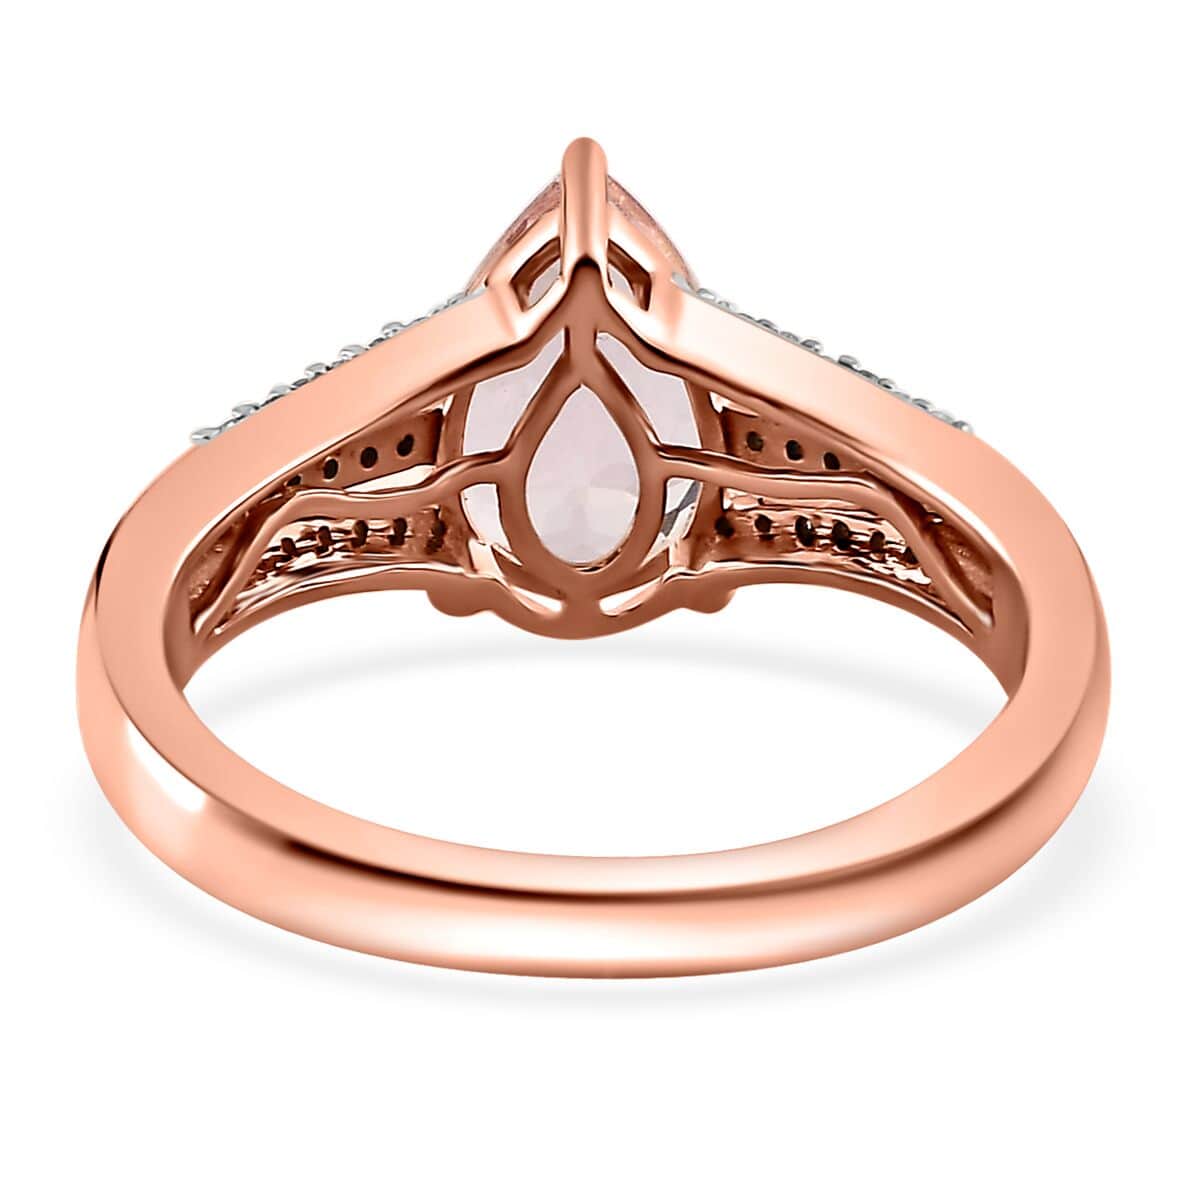 Luxoro 10K Rose Gold Premium Pink Morganite and Diamond Ring (Size 9.0) 1.75 ctw image number 4